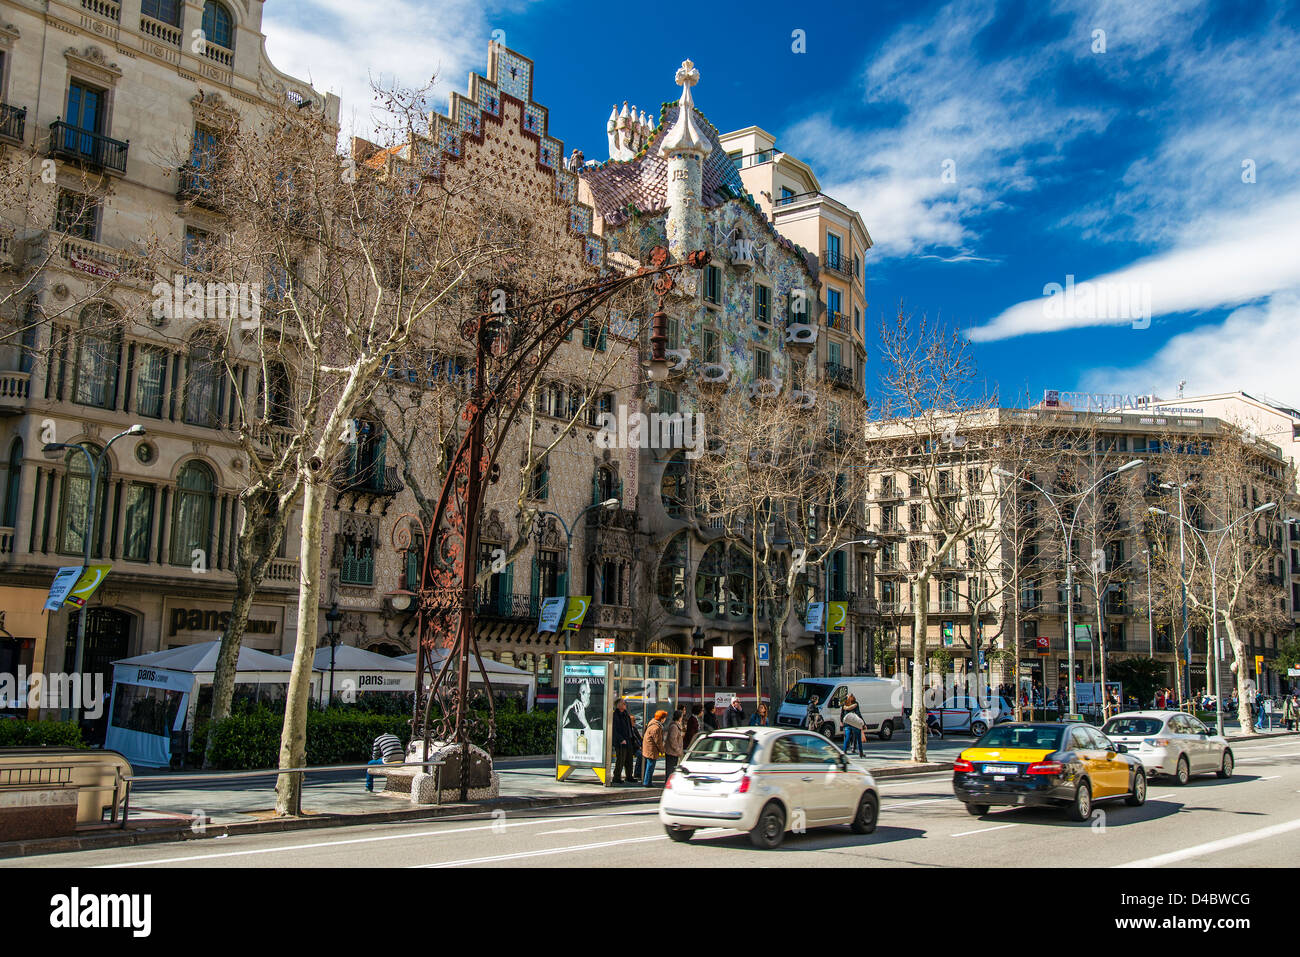 Passeig de gracia barcelona fotografías e imágenes de alta resolución -  Alamy